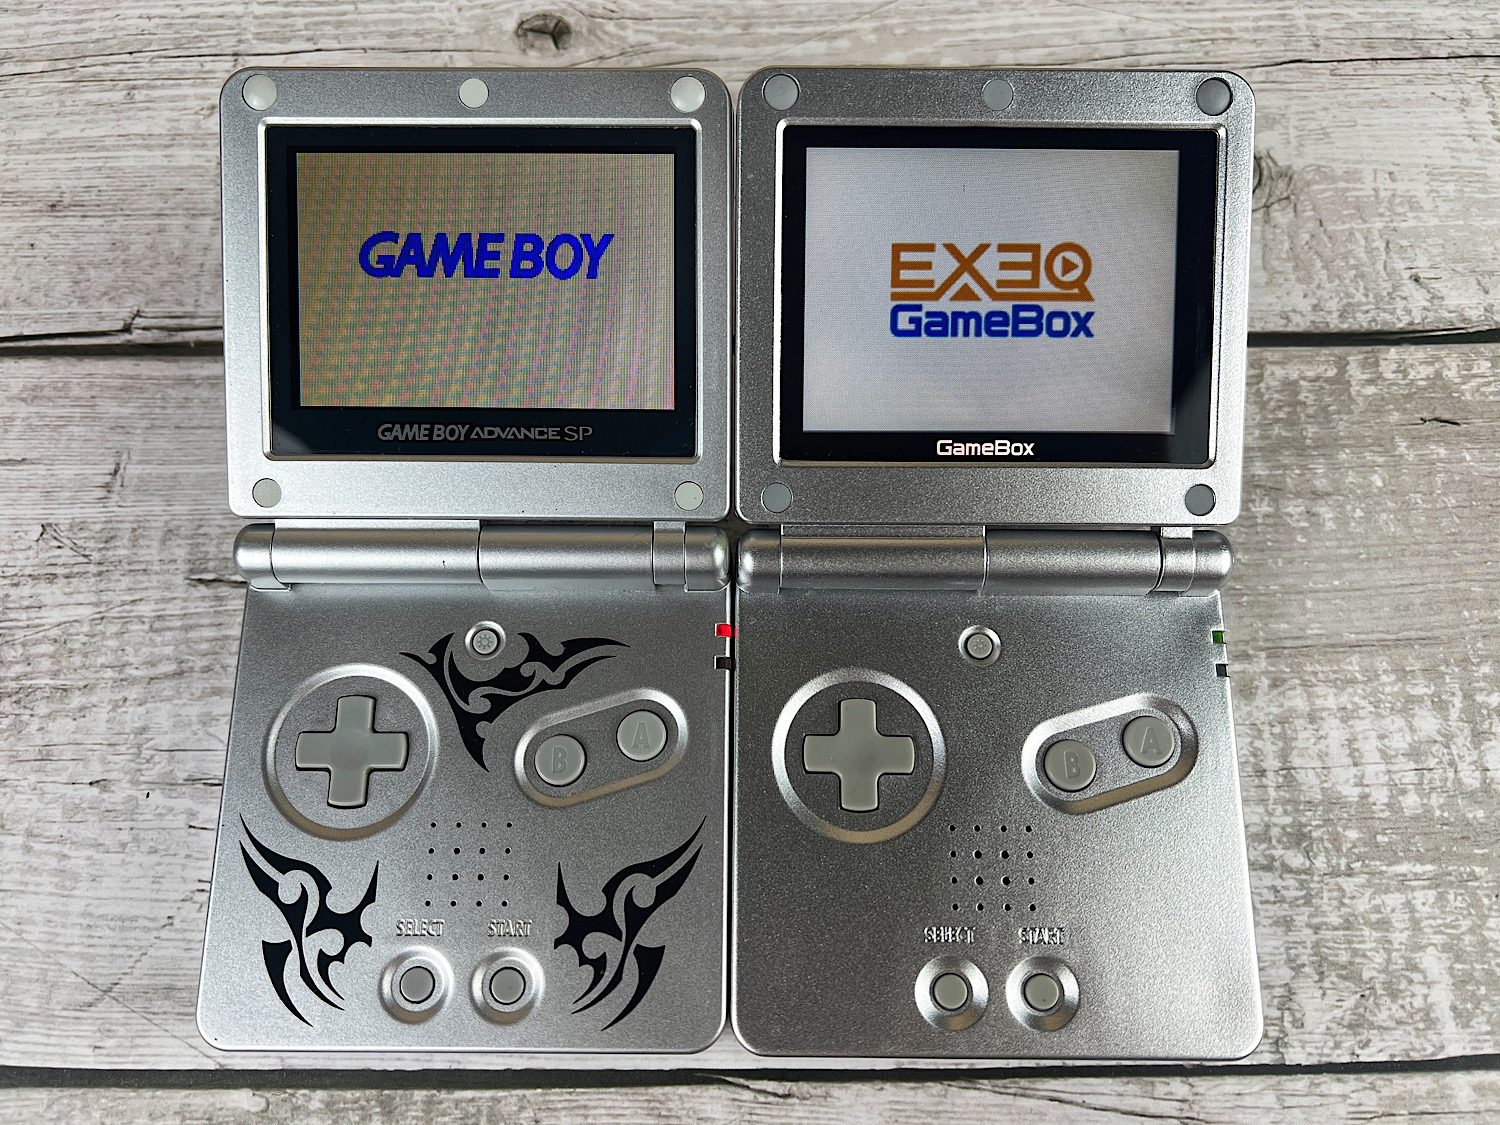 Exeq Gamebox и Game Boy Advance SP